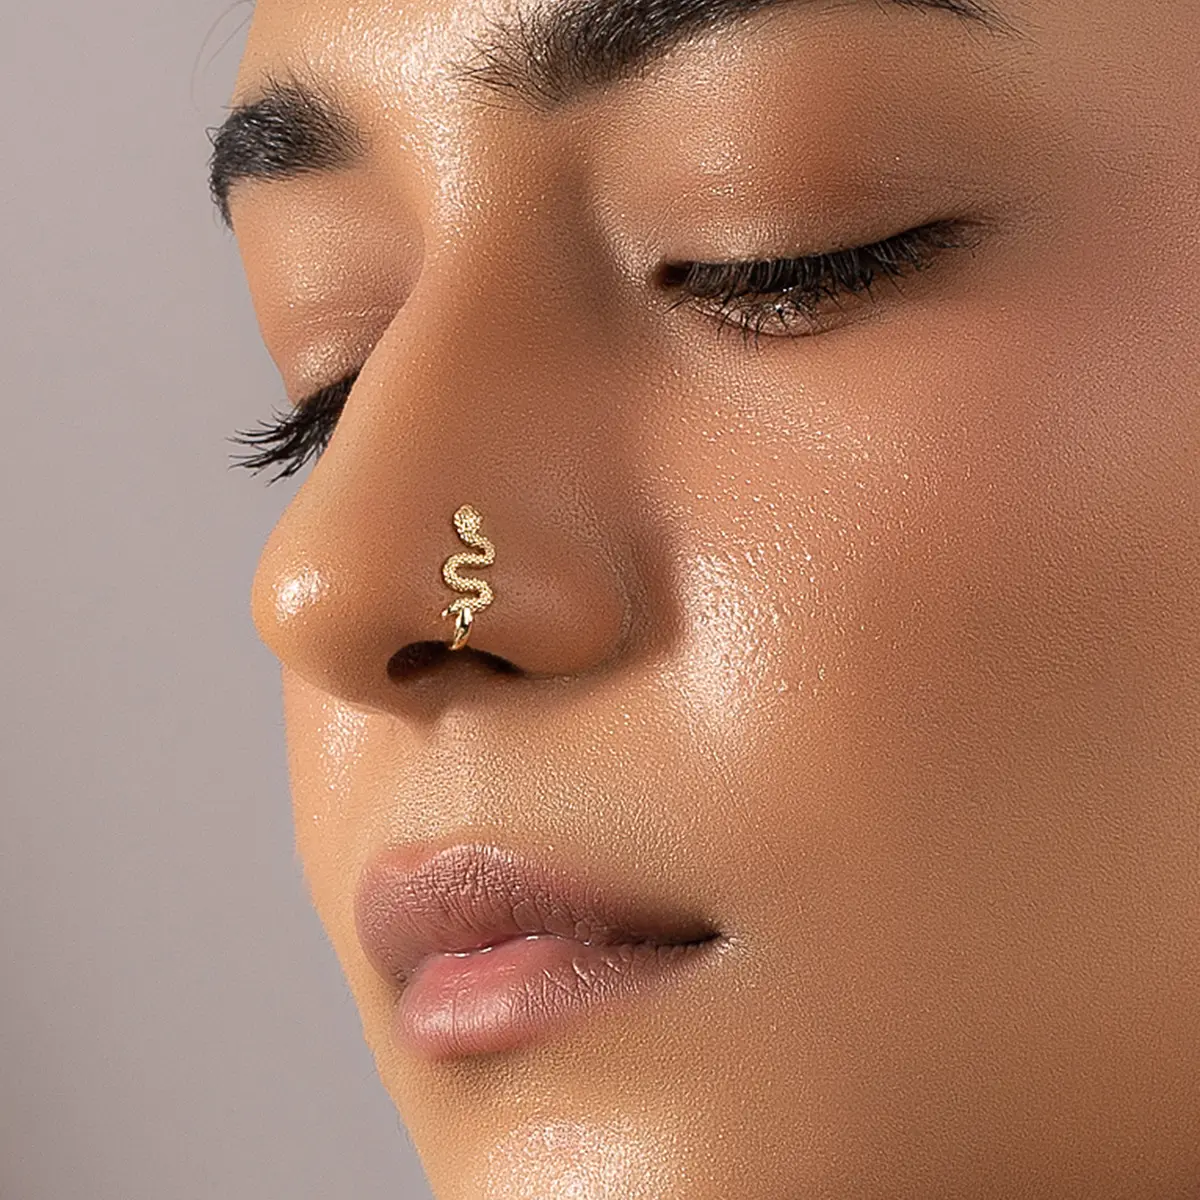 Creative אופנה נחושת זהב מצופה נחש צורת ללא חור פירסינג האף טבעות לנשים